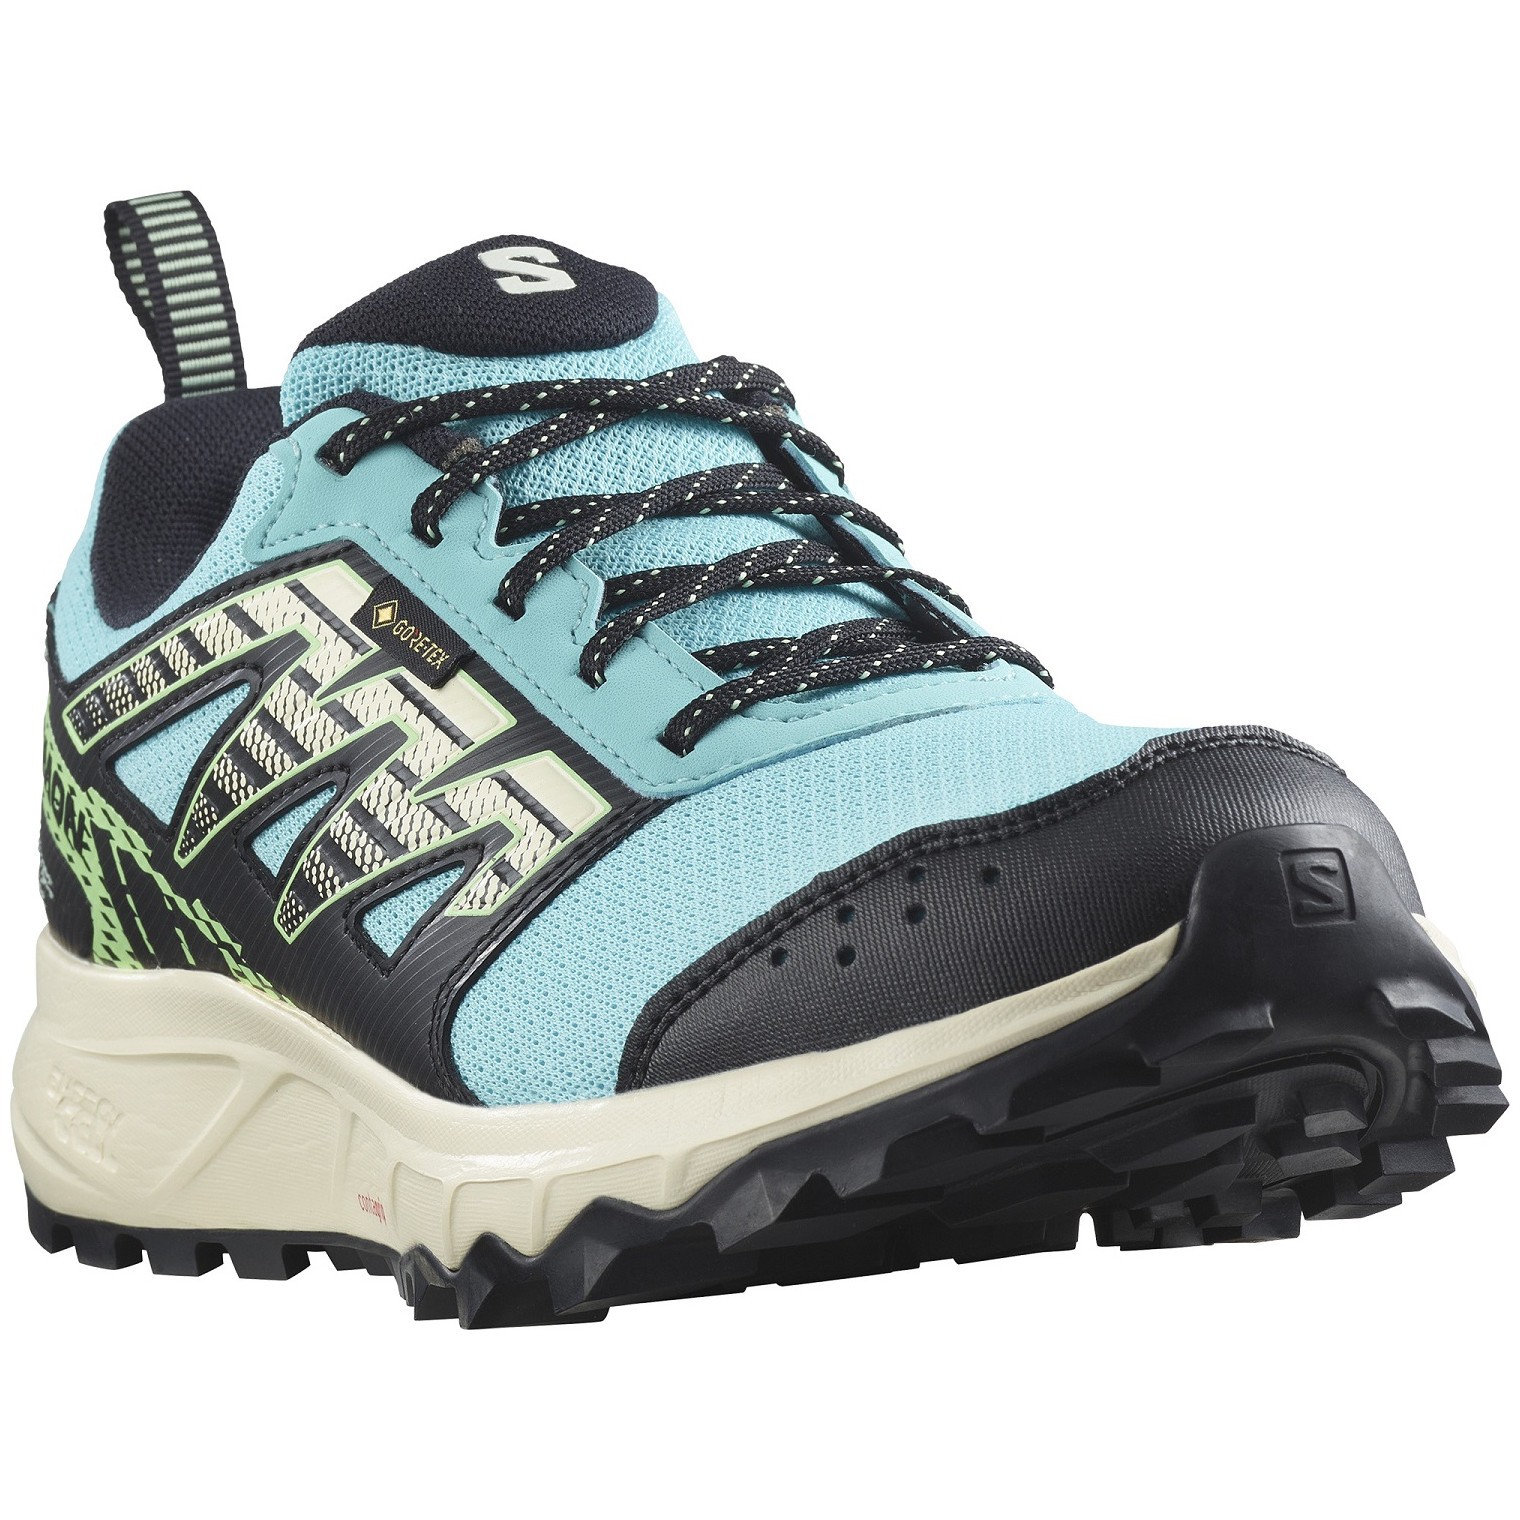 Dámské běžecké boty Salomon Wander Gore-Tex Velikost bot (EU): 38 (2/3) / Barva: modrá/bíla